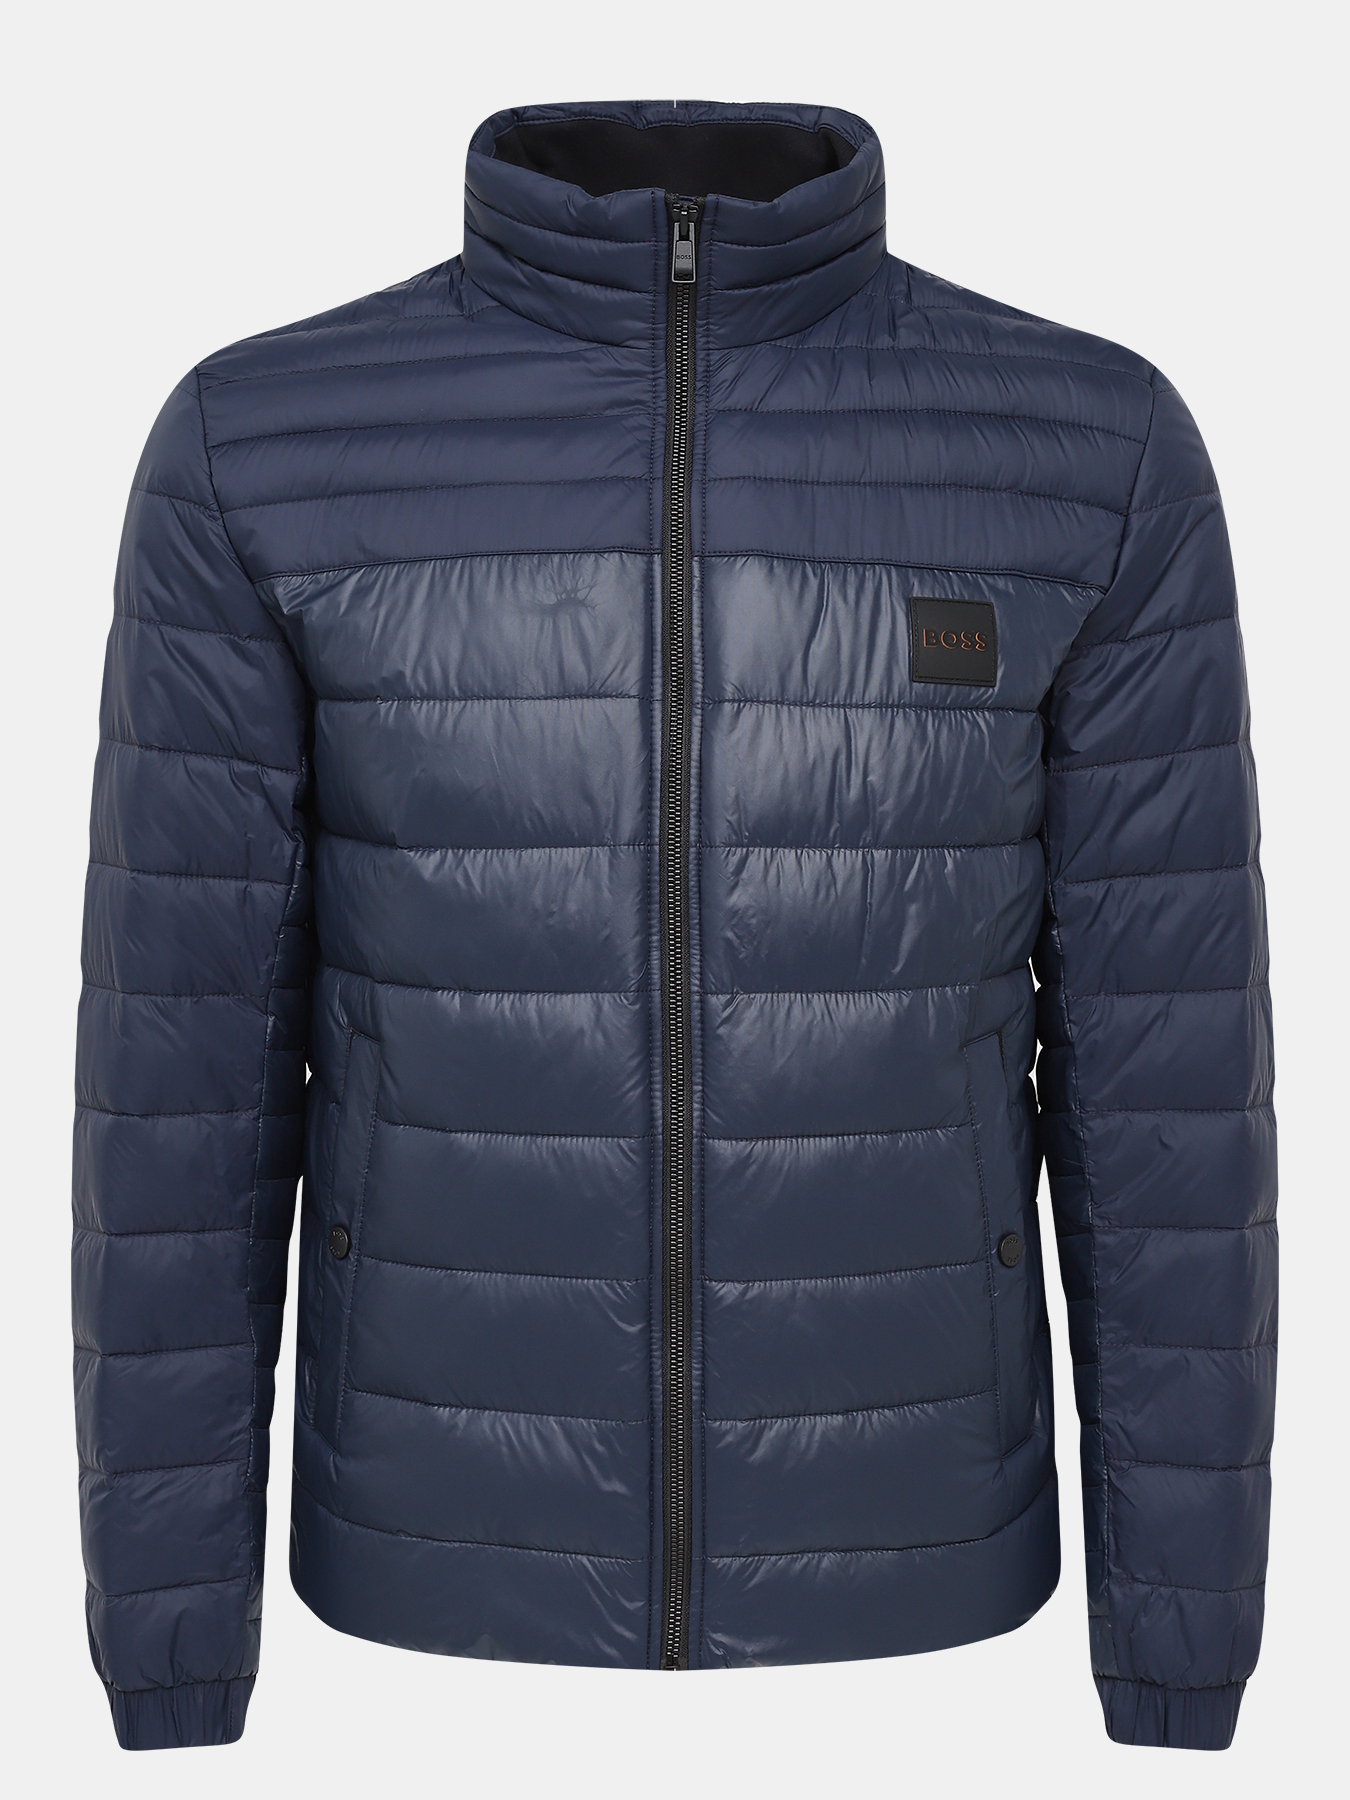 Куртка Oden BOSS 434079-025, цвет темно-синий, размер 48